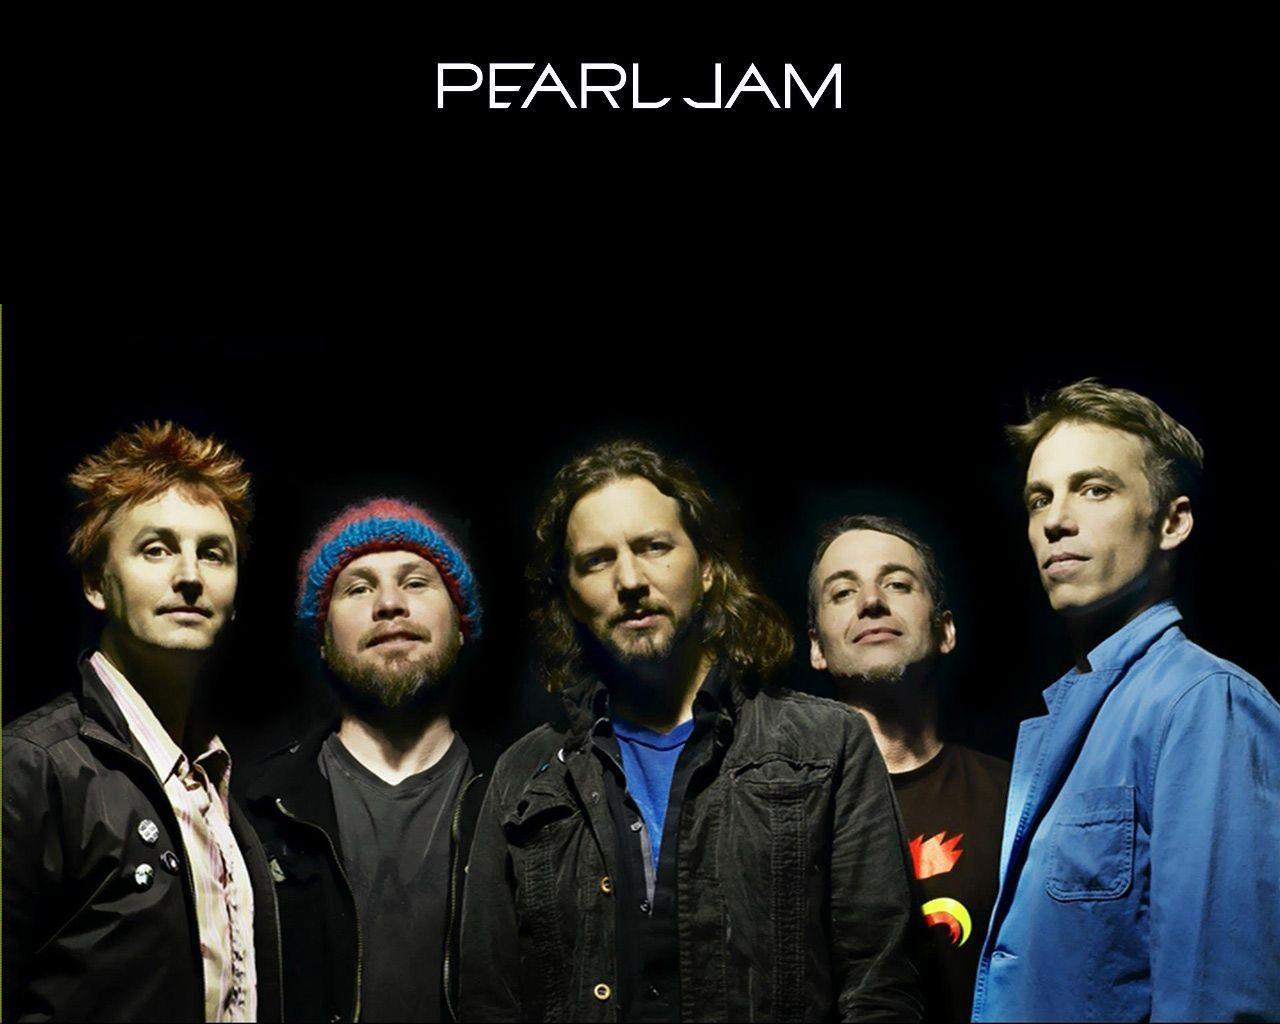 Desktop Wallpaper · Celebrities · Music · Pearl Jam is an American